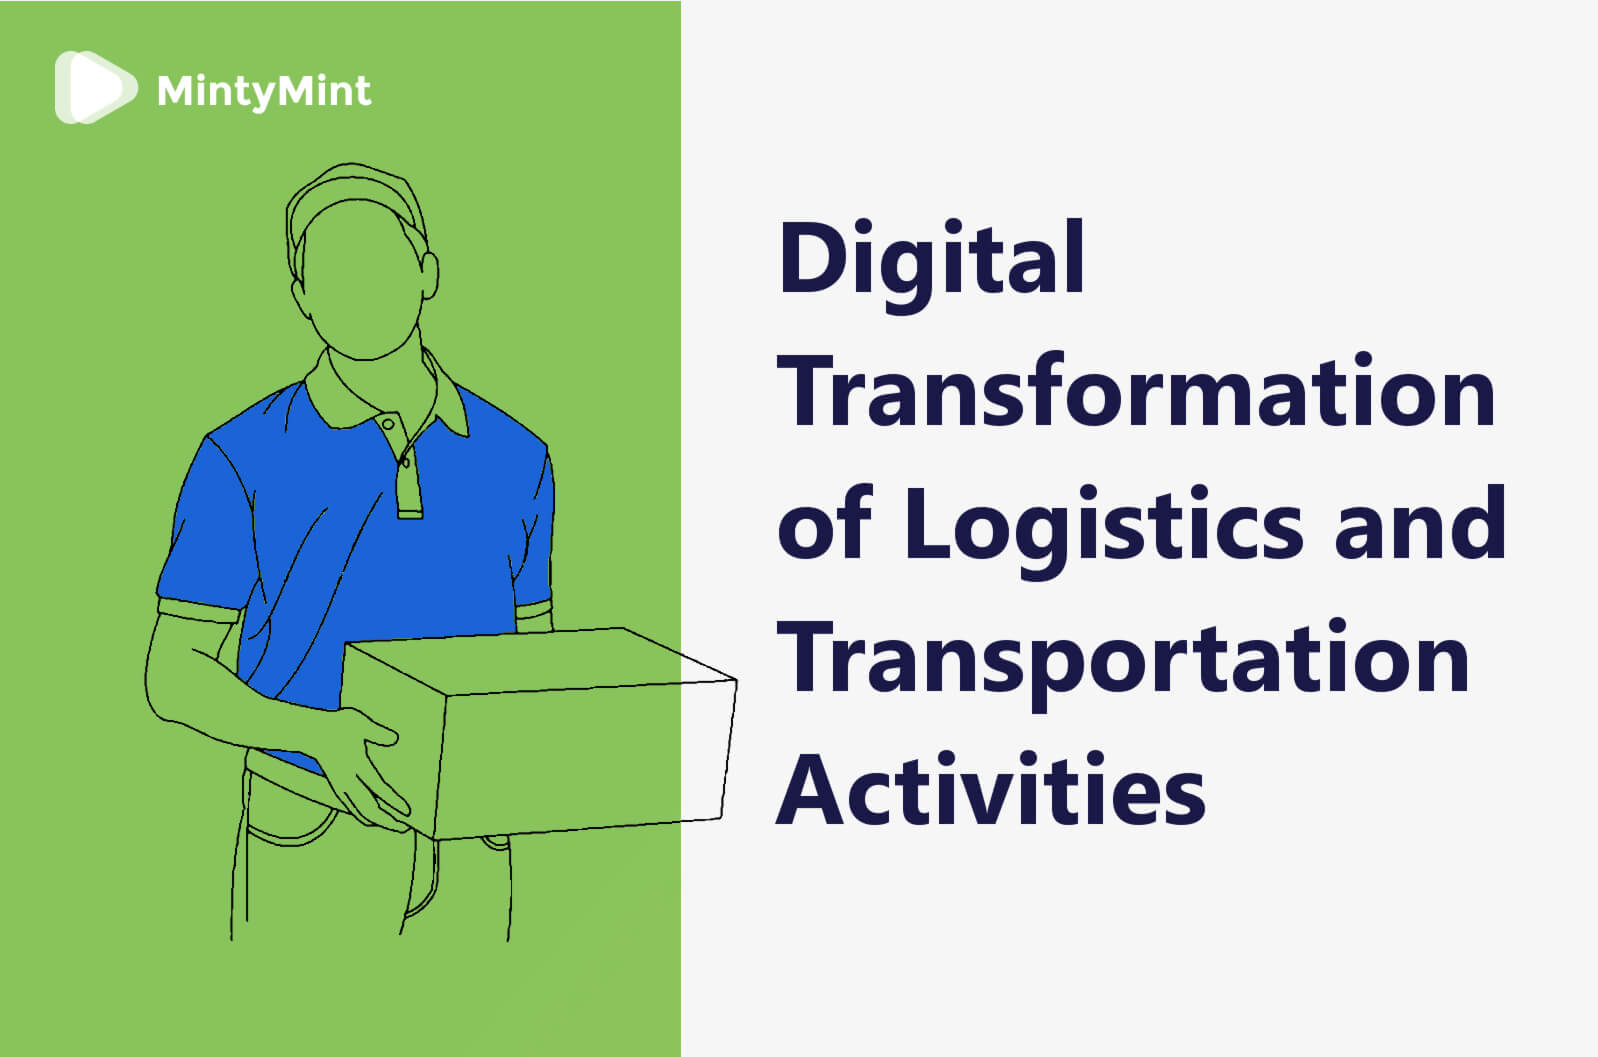 Digital transformation in Logistics cover